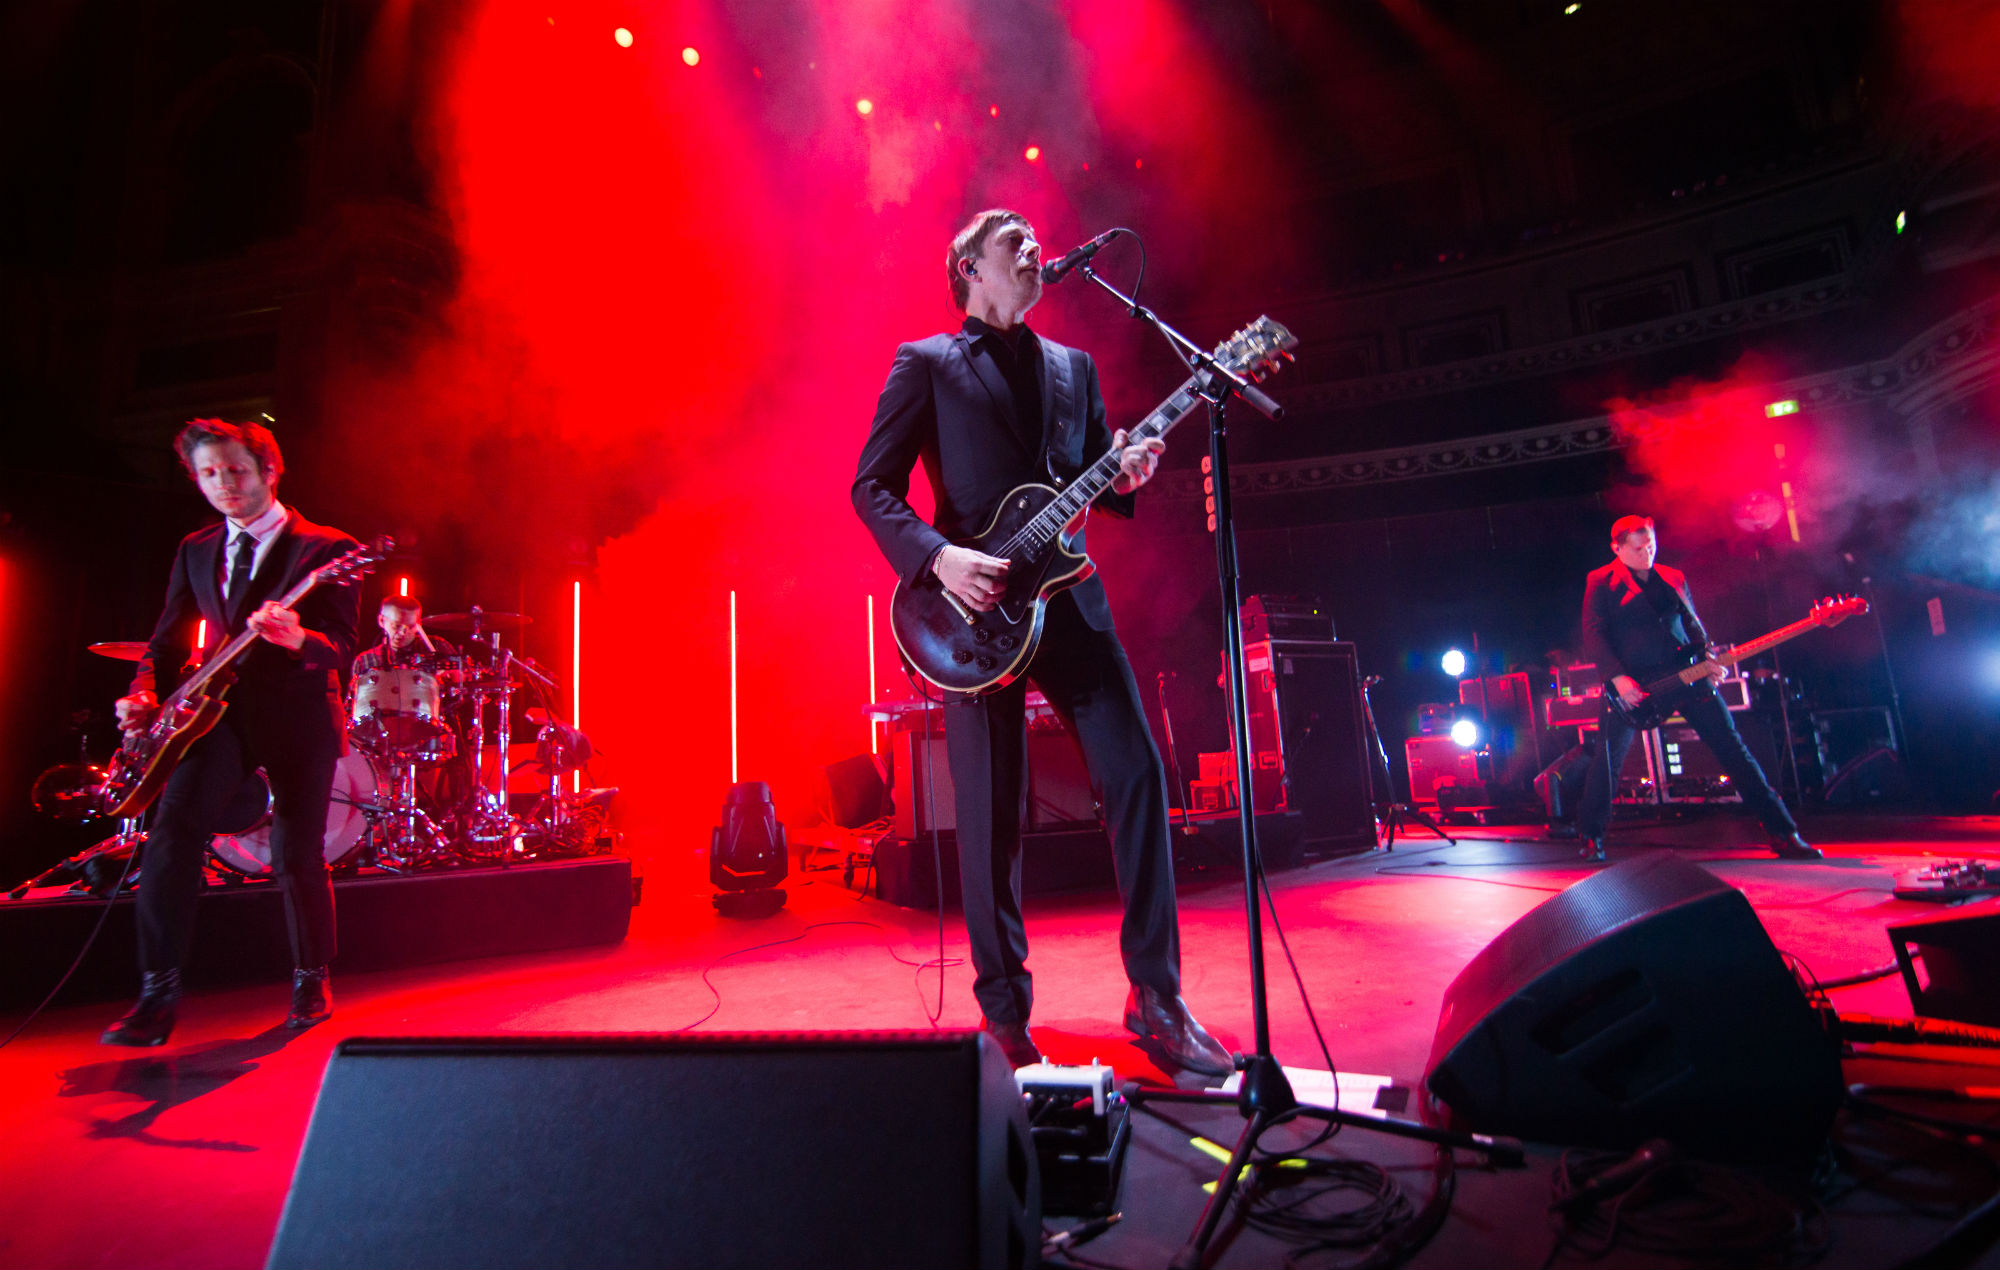 Interpol kick off European tour with majestic Royal Albert Hall show